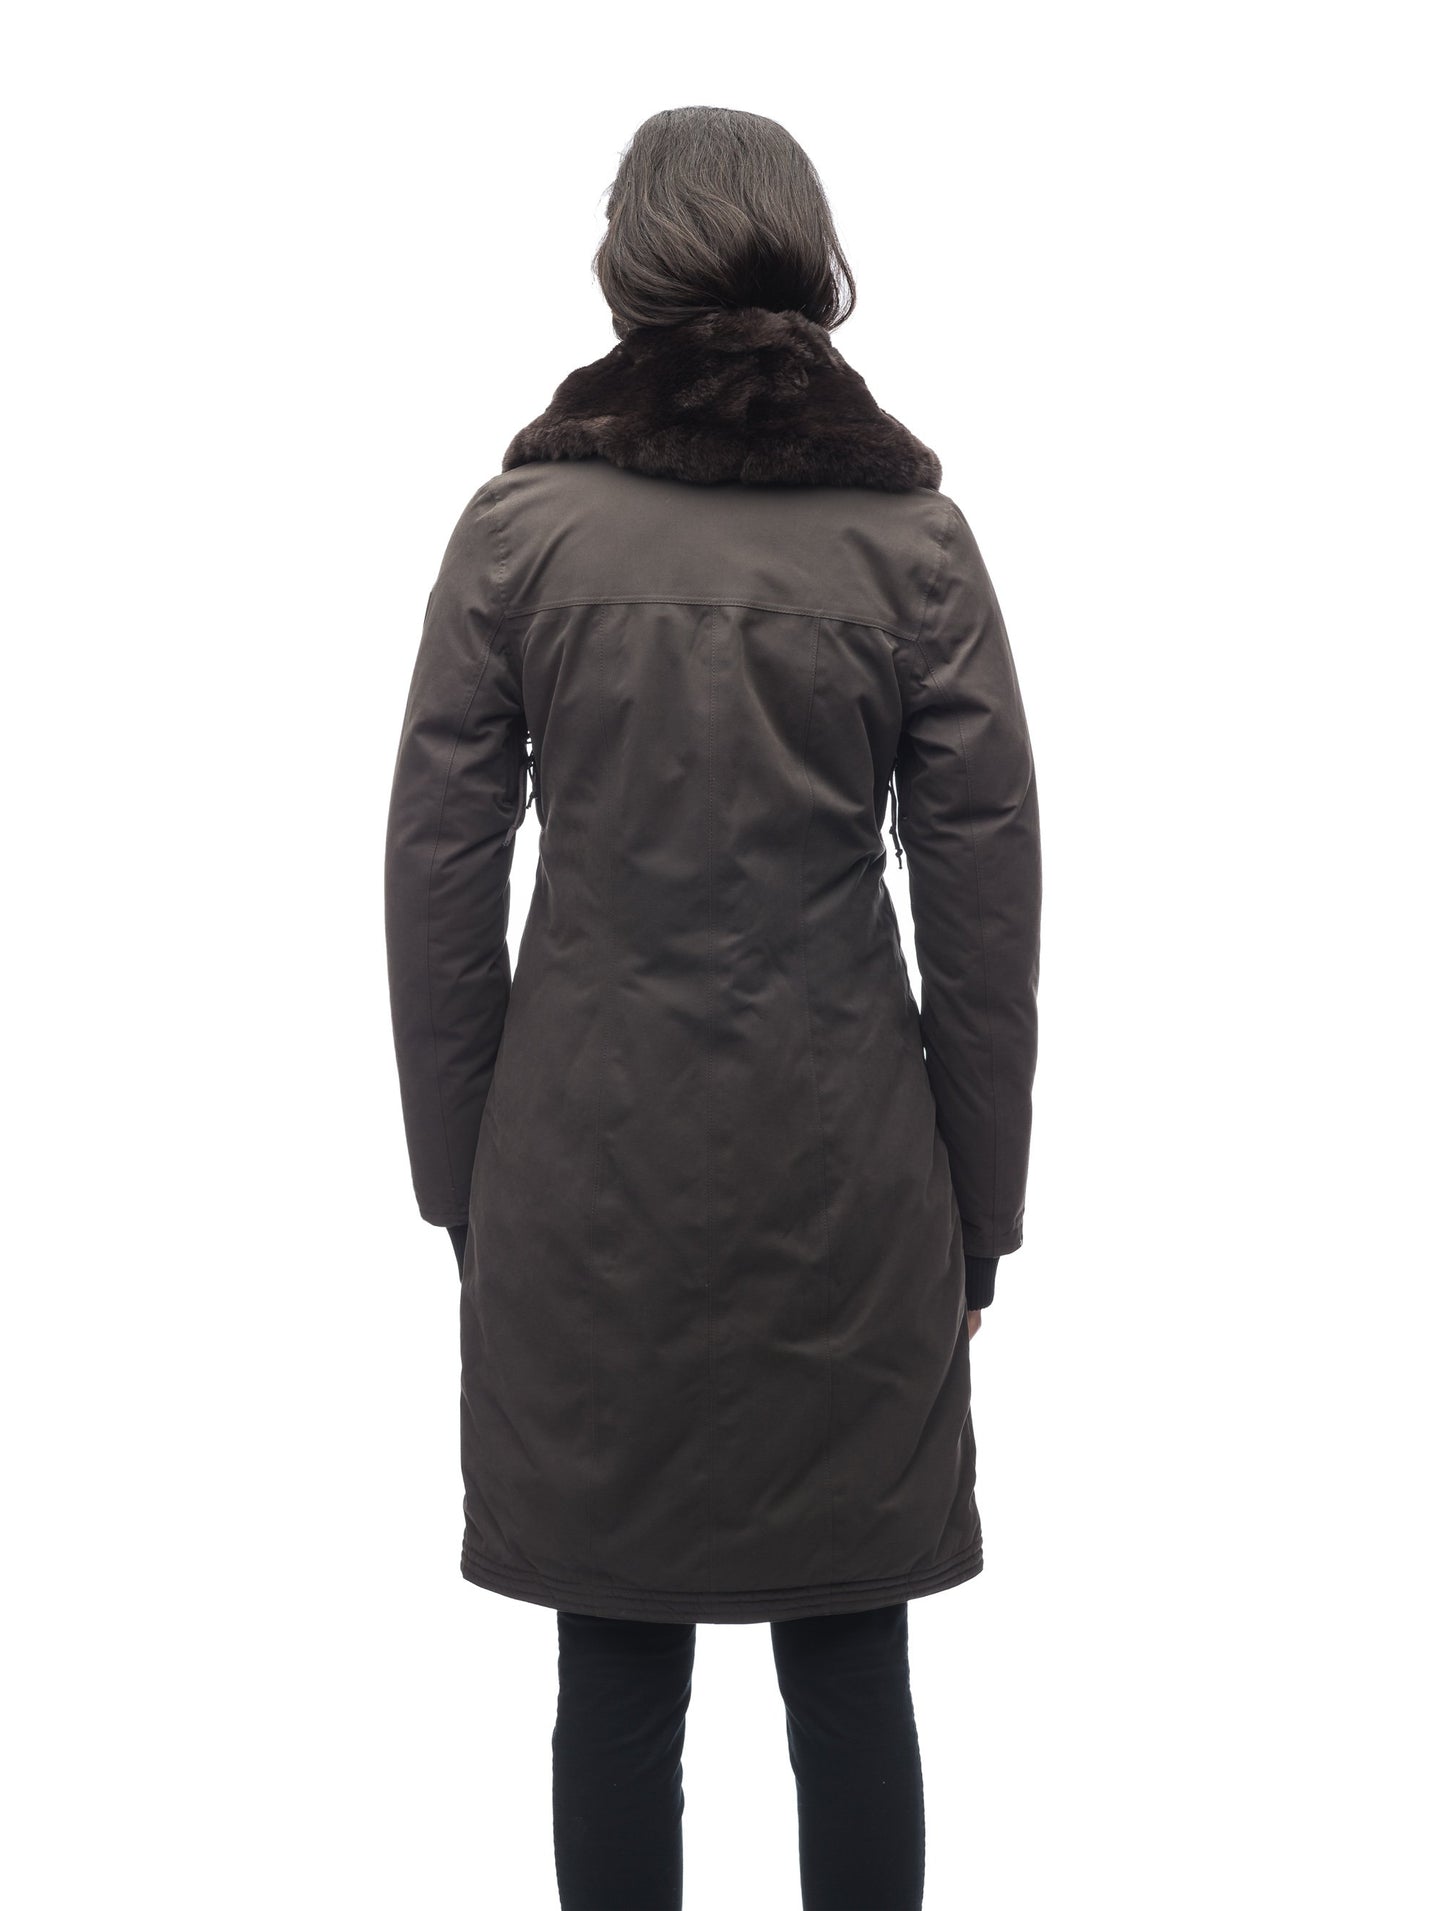 Women's down filled overcoat with fur trim in Dark Brown